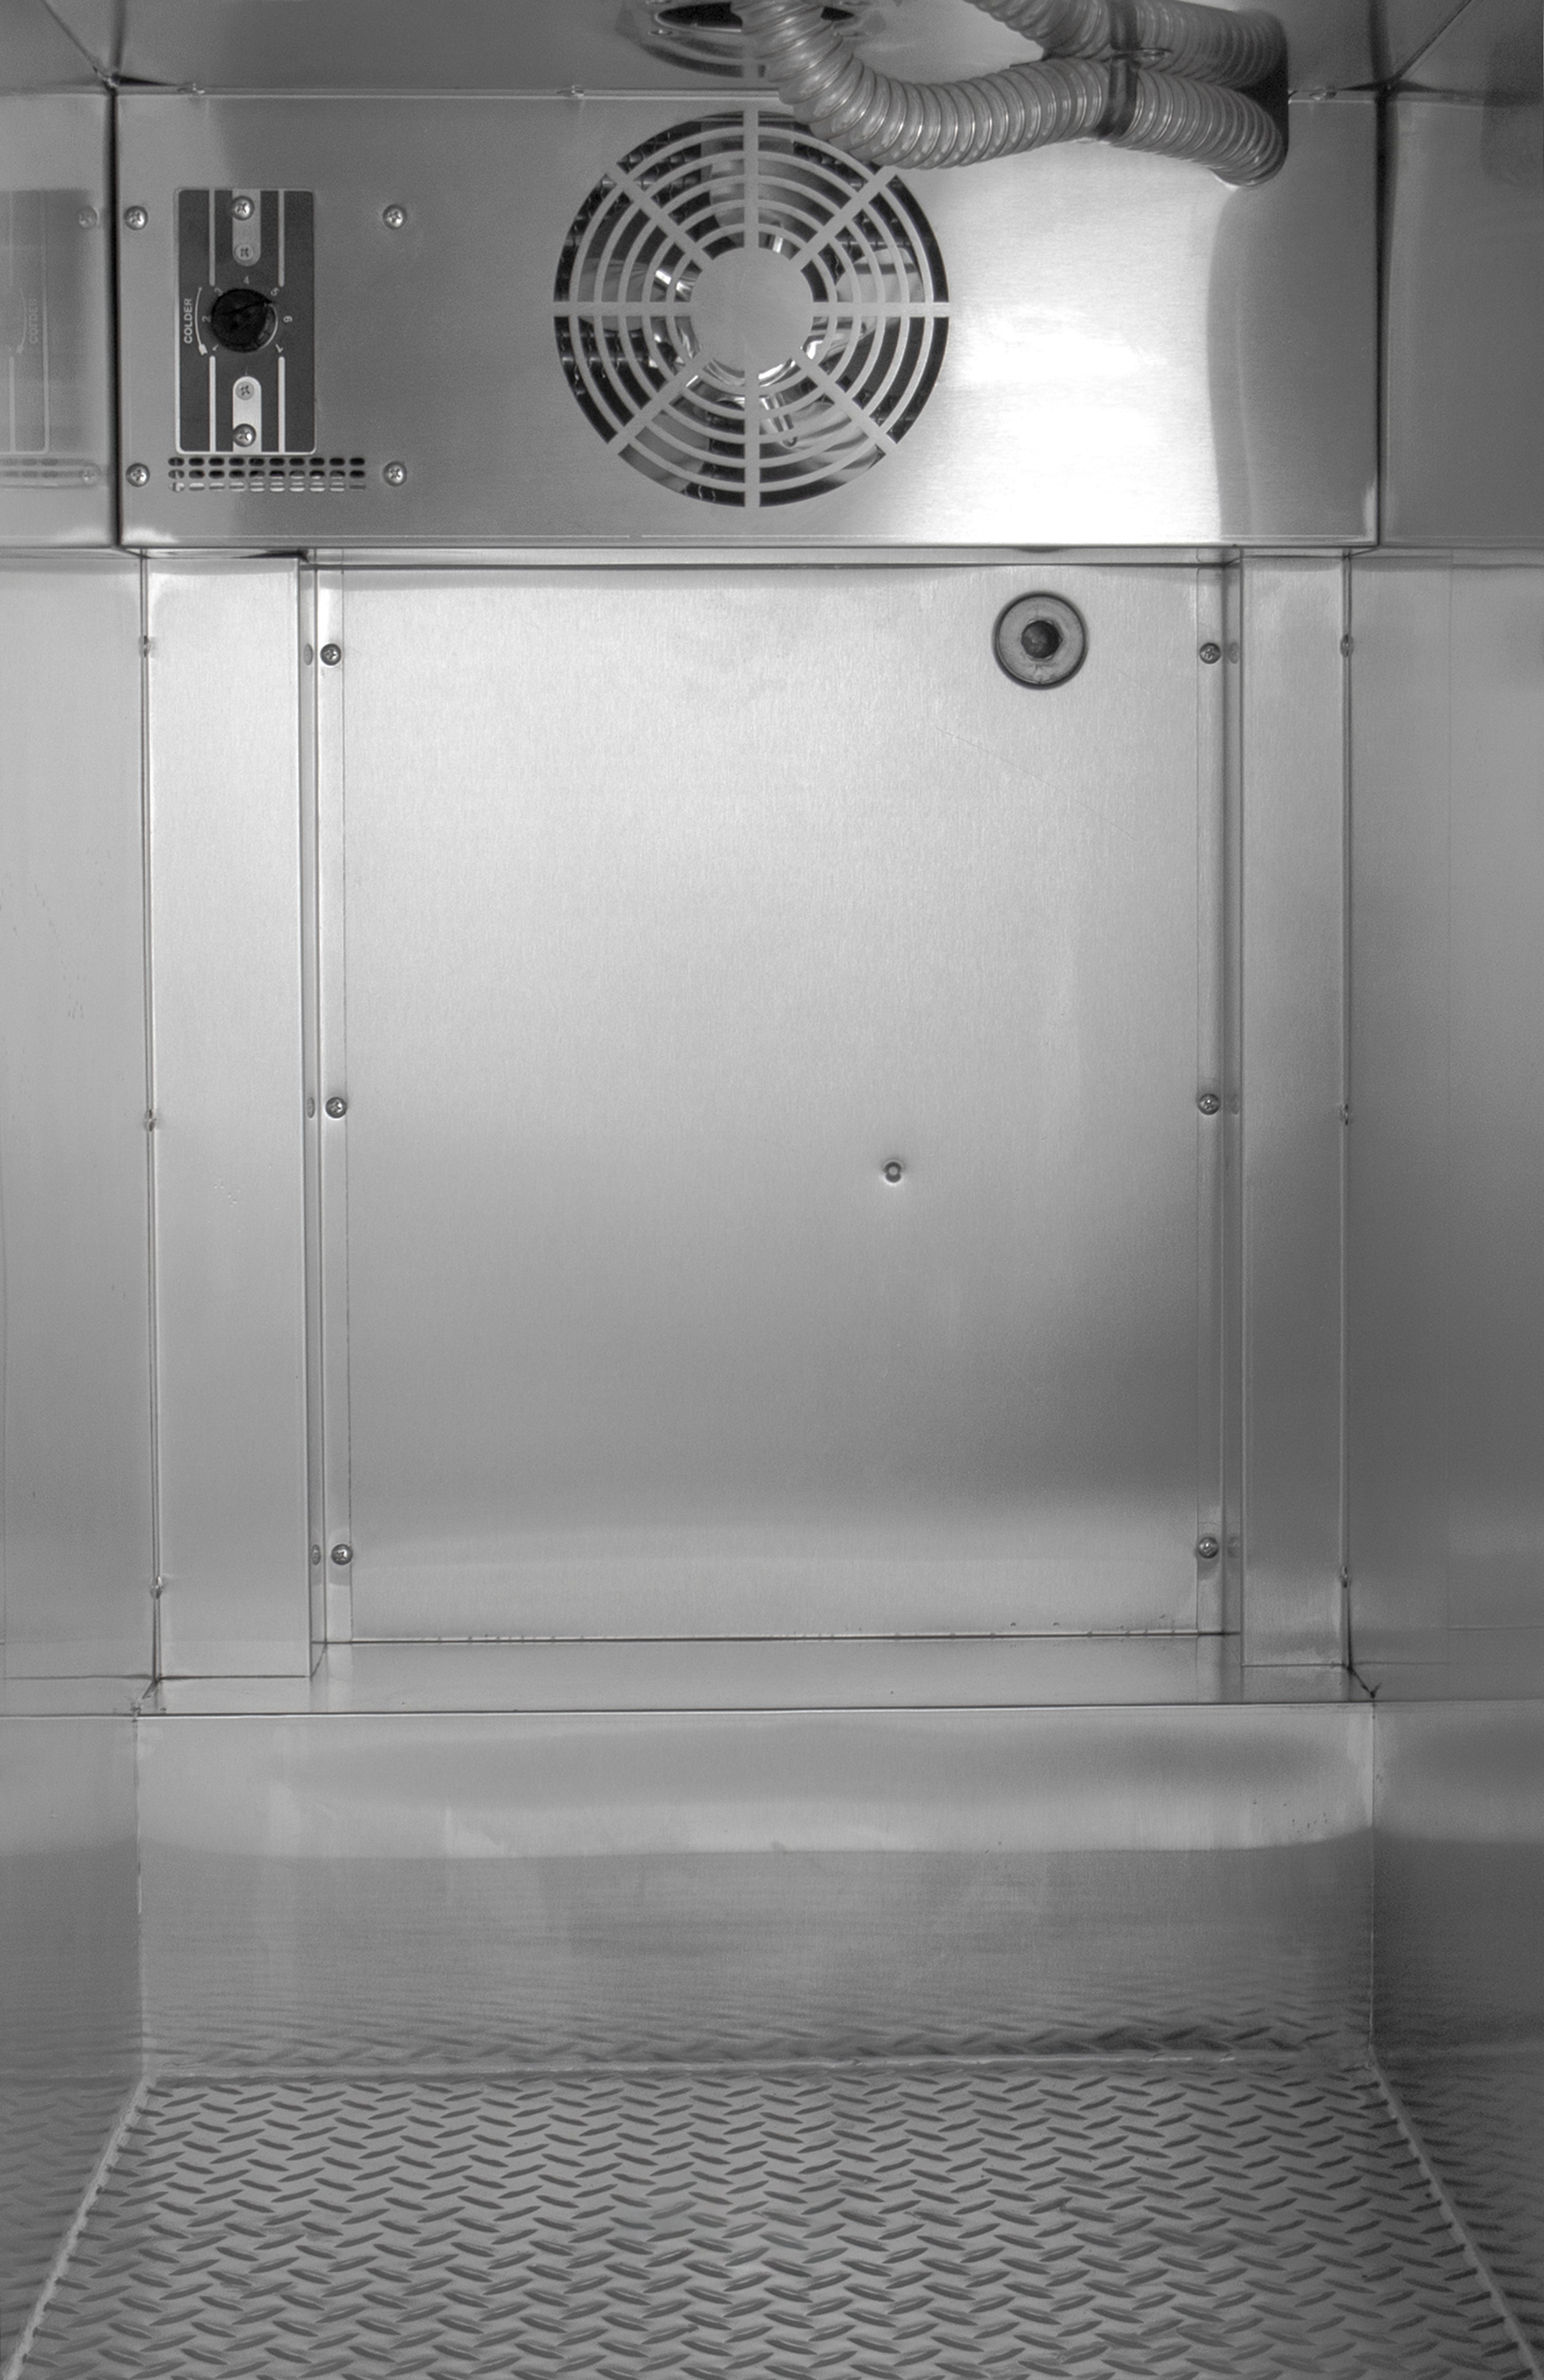 Kegco ICTCK-1B-3 Triple Faucet Commercial Kegerator Iced Coffee Keg Dispenser - Black